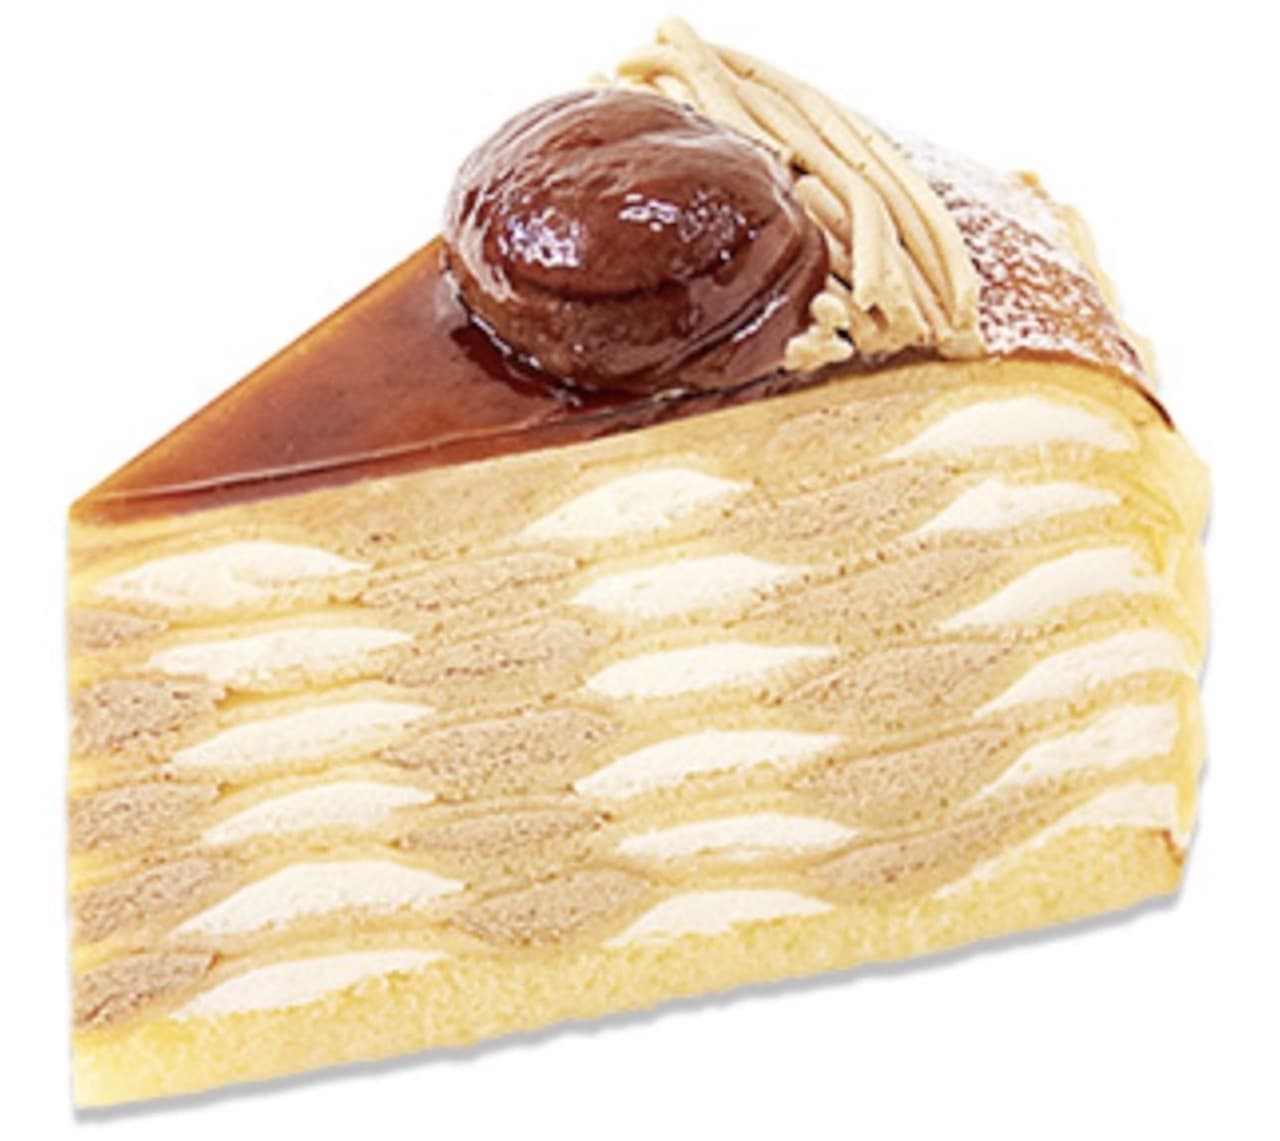 Fujiya "Japanese Chestnut Pudding Shortcake